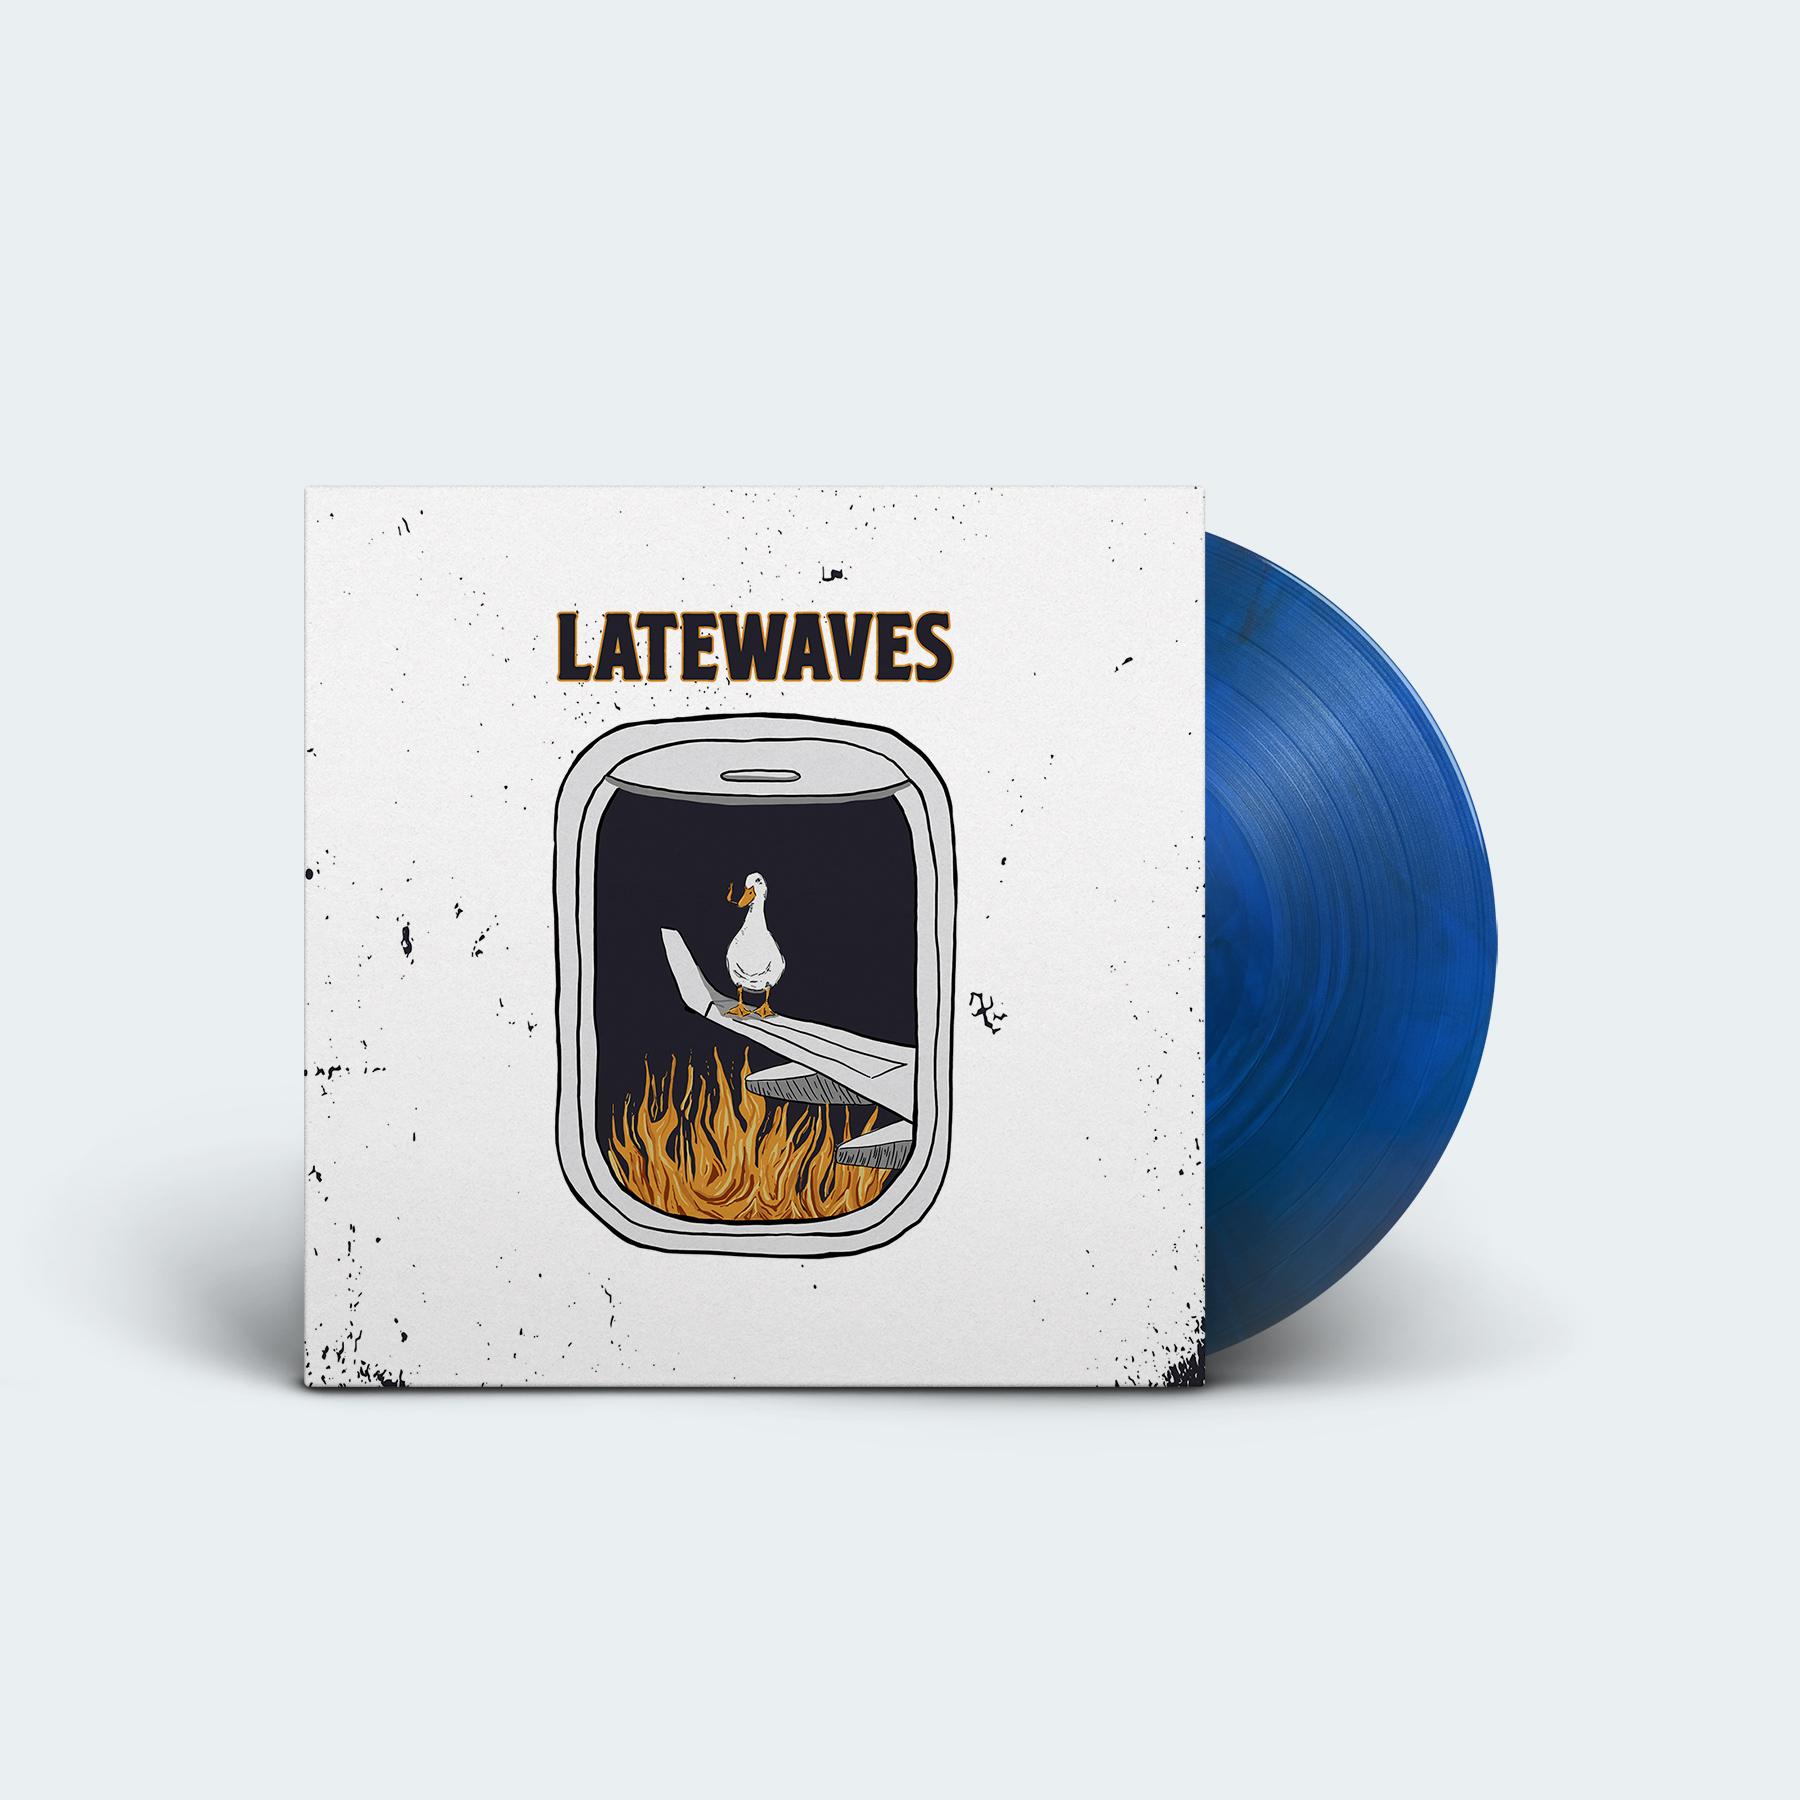 Latewaves vinyl2